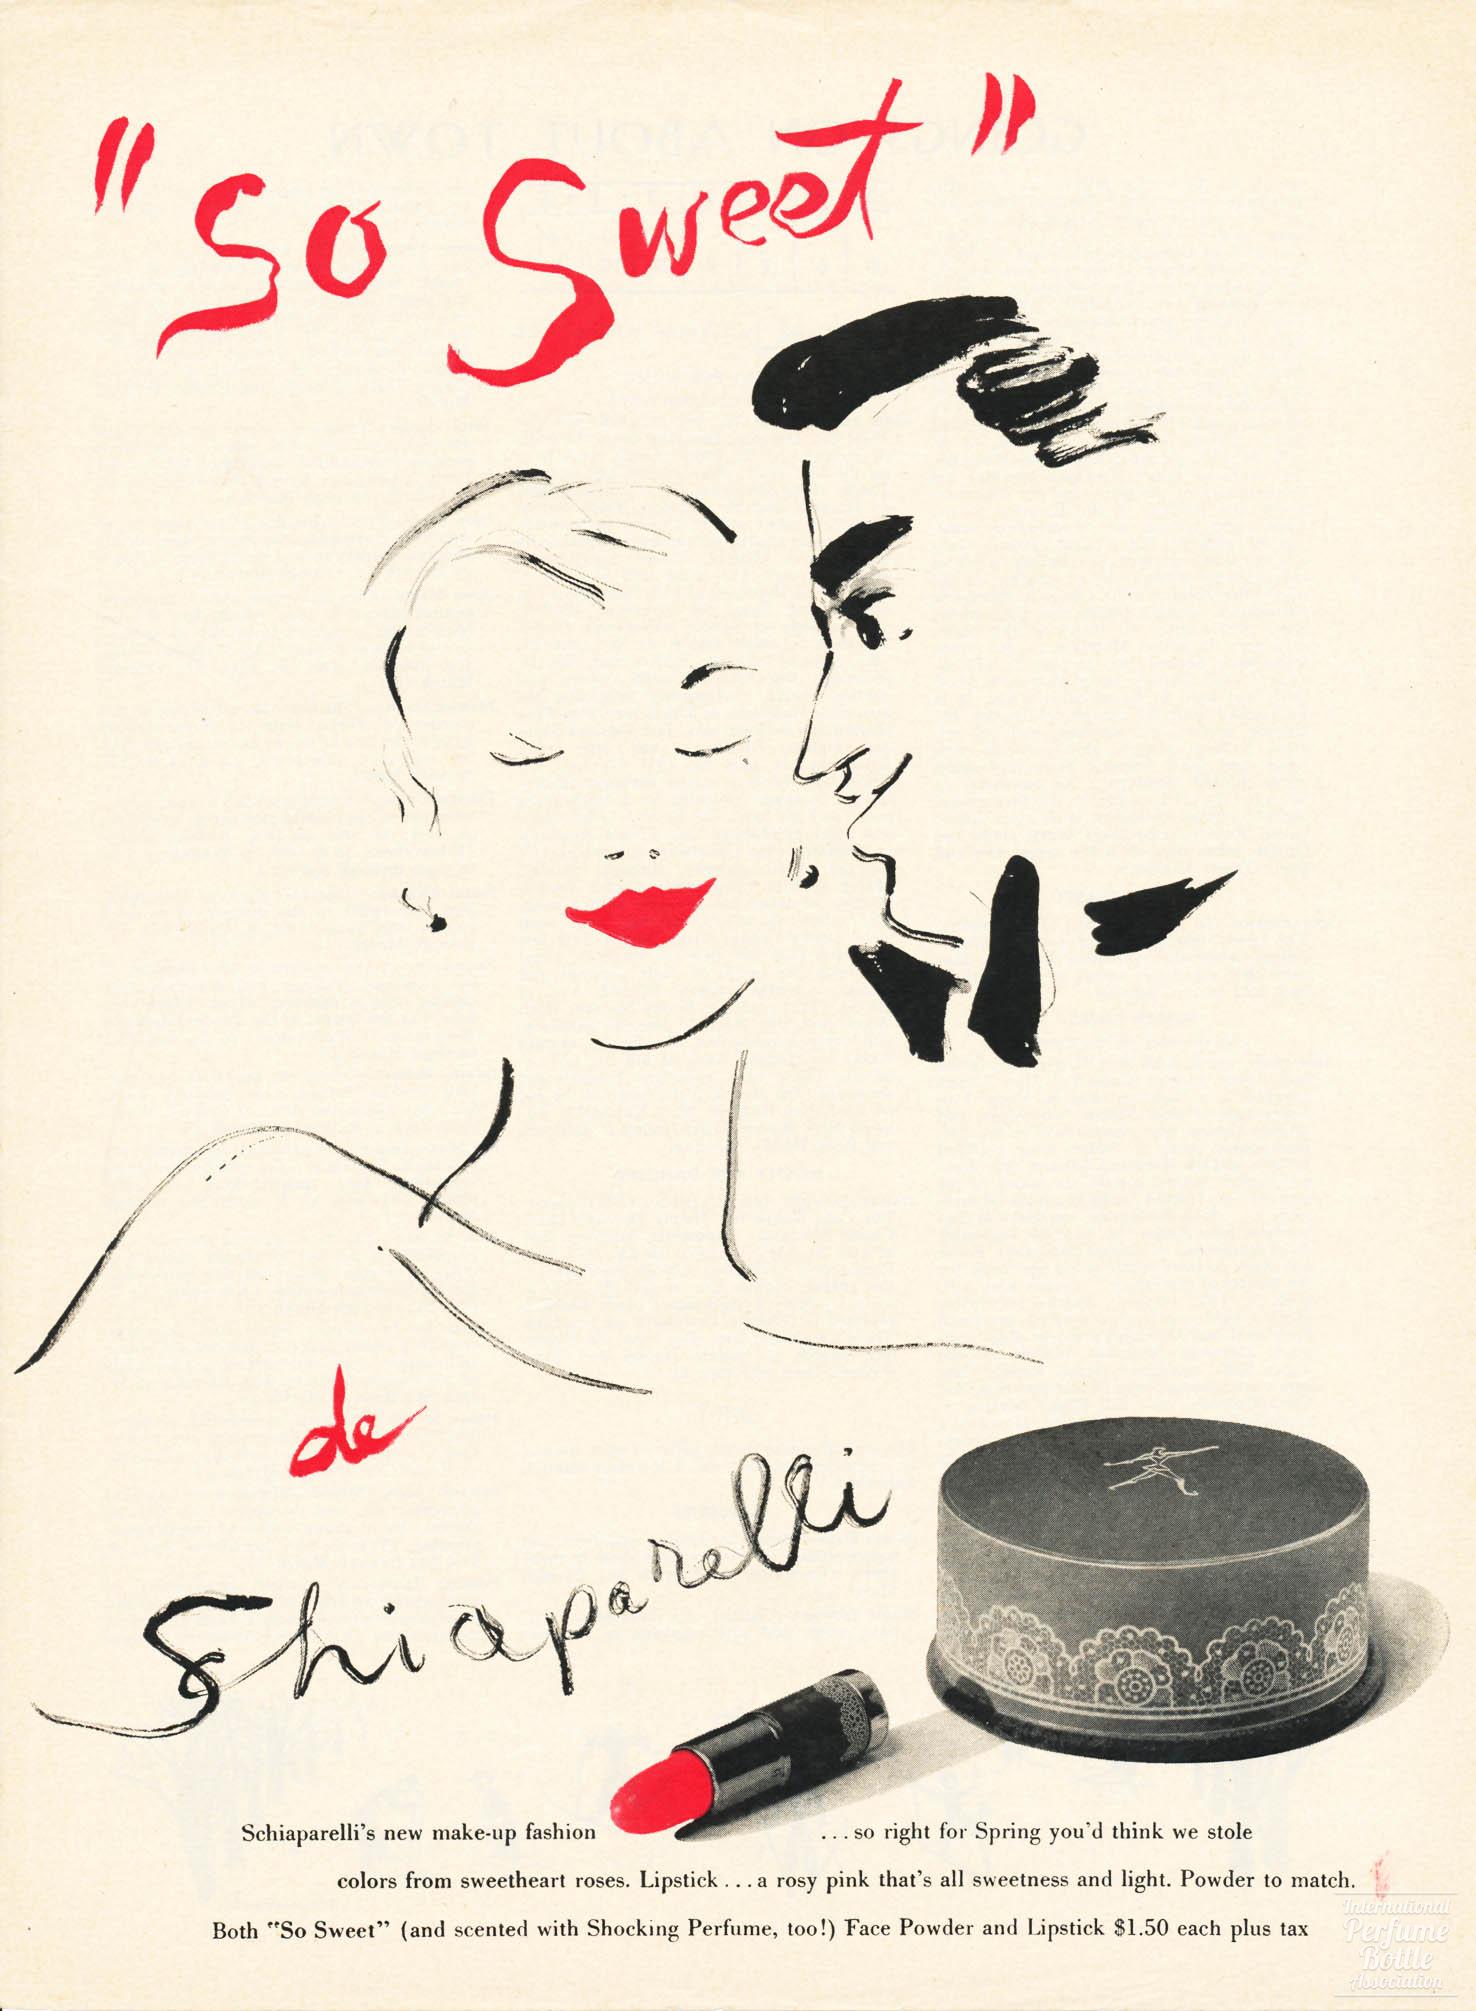 "So Sweet" by Schiaparelli Lipstick and Powder Advertisement - 1950